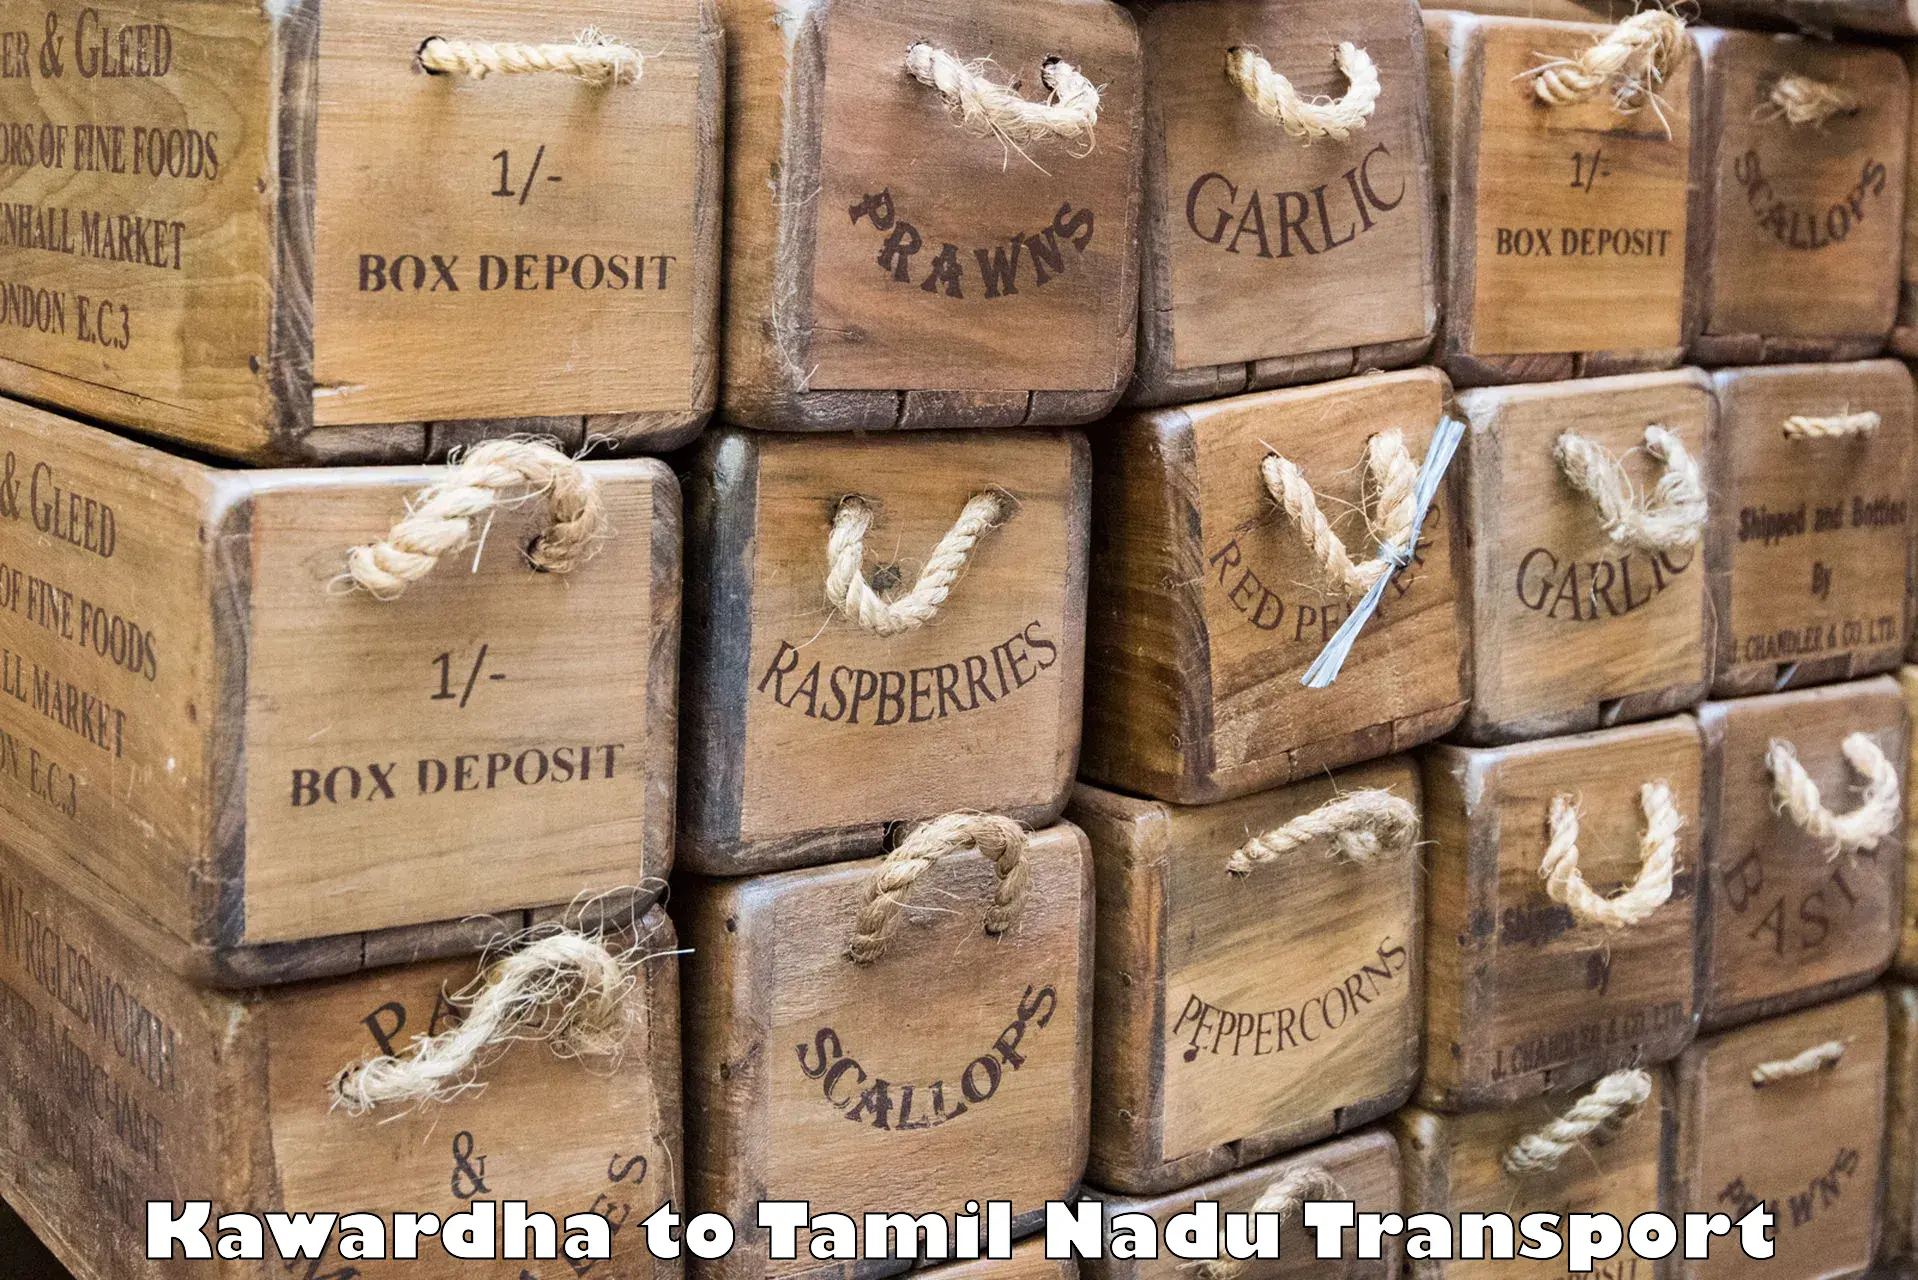 Delivery service Kawardha to Thanjavur